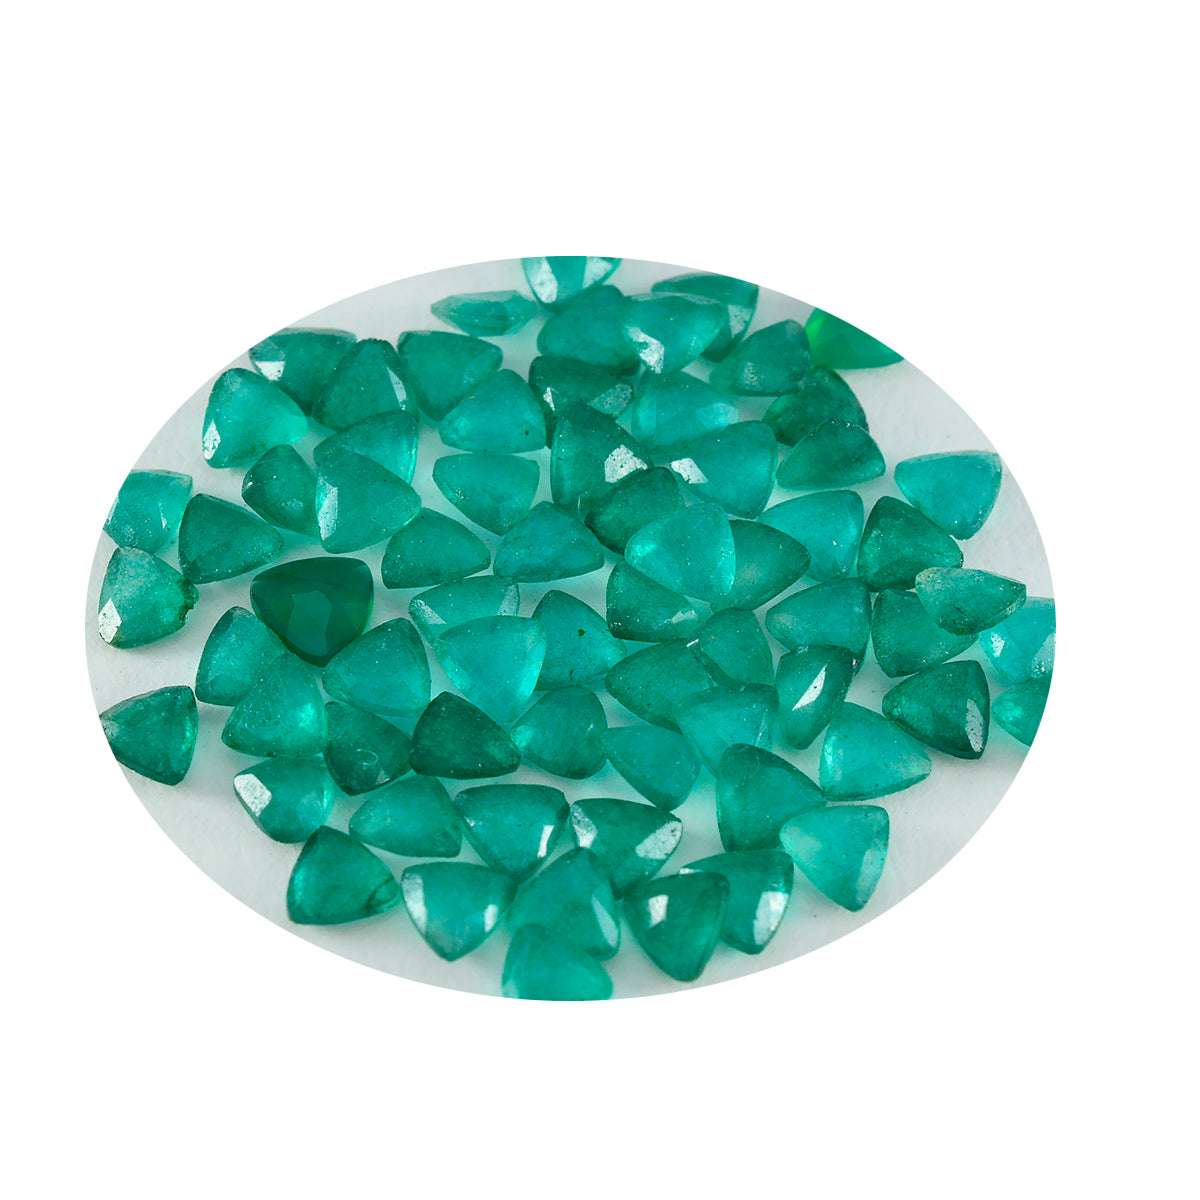 Riyogems 1PC Real Green Jasper Faceted 5x5 mm Trillion Shape A+1 Quality Gemstone